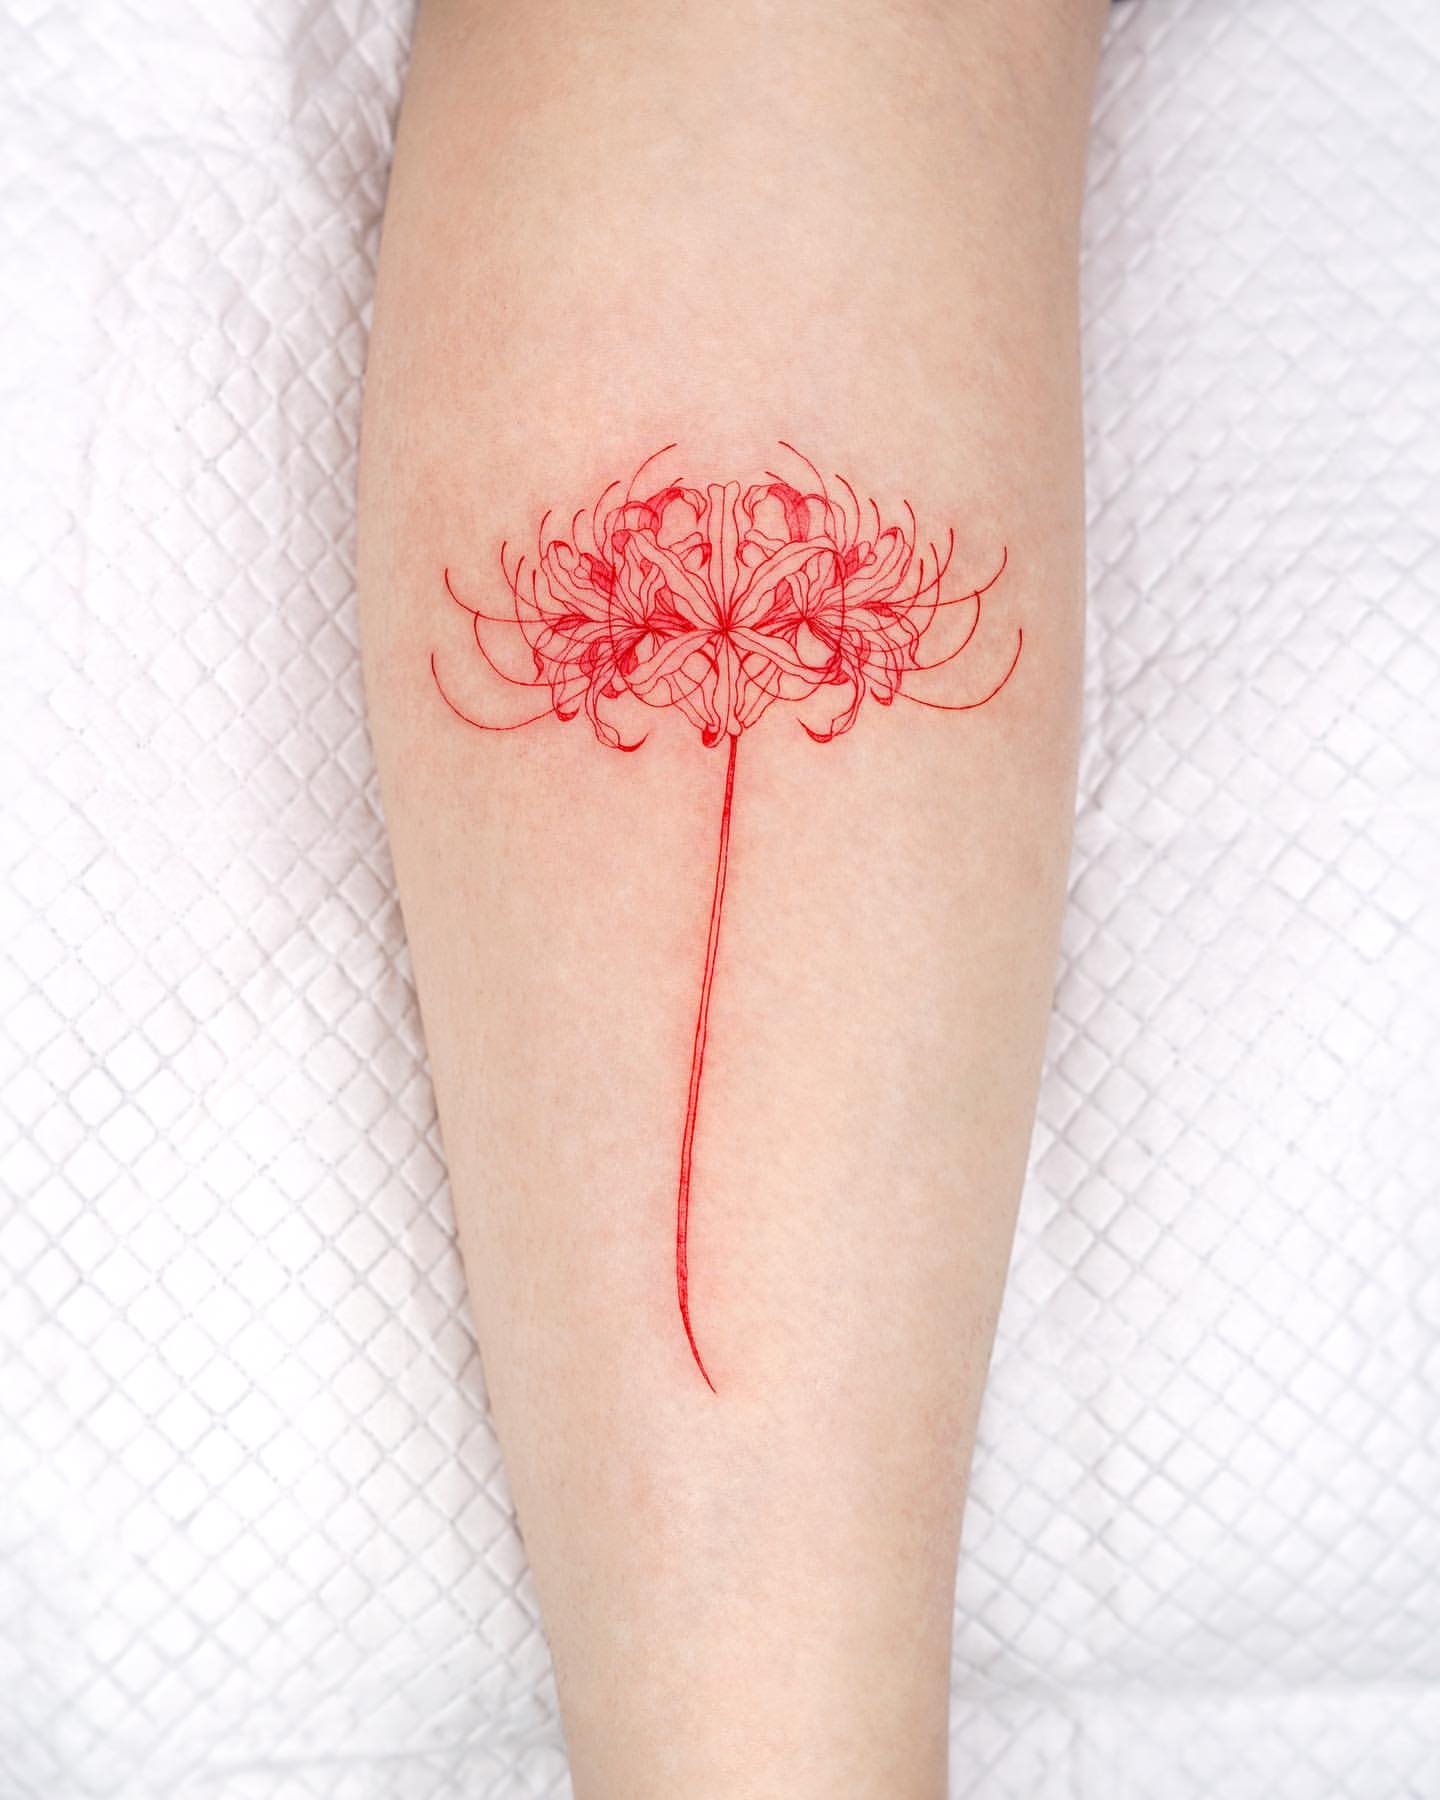 Spider Lily Tattoo Ideas 5